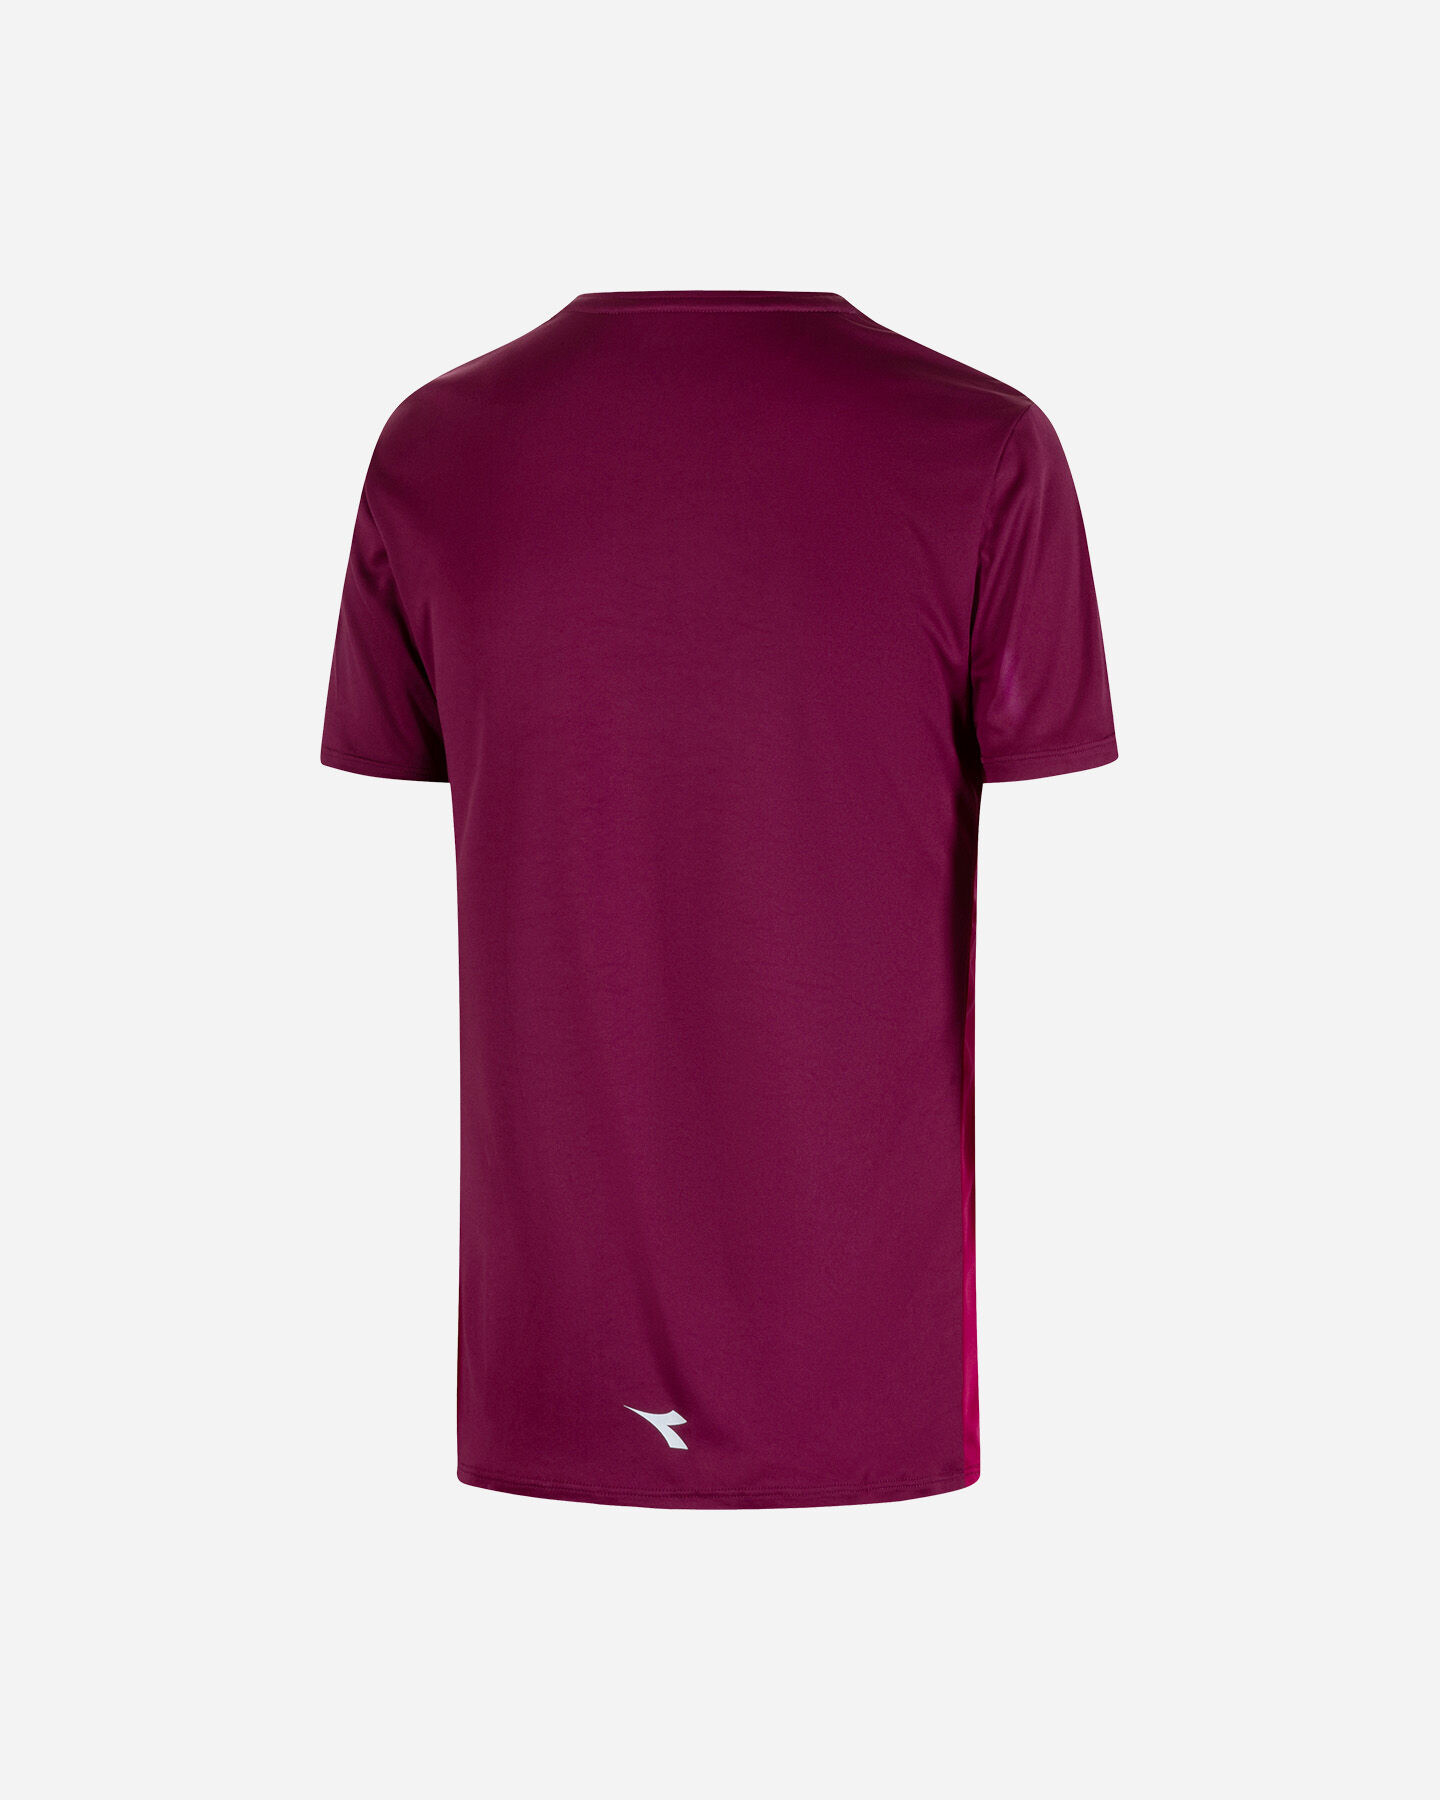  T-Shirt tennis DIADORA CLASSIC W S5577546|55050|S scatto 1